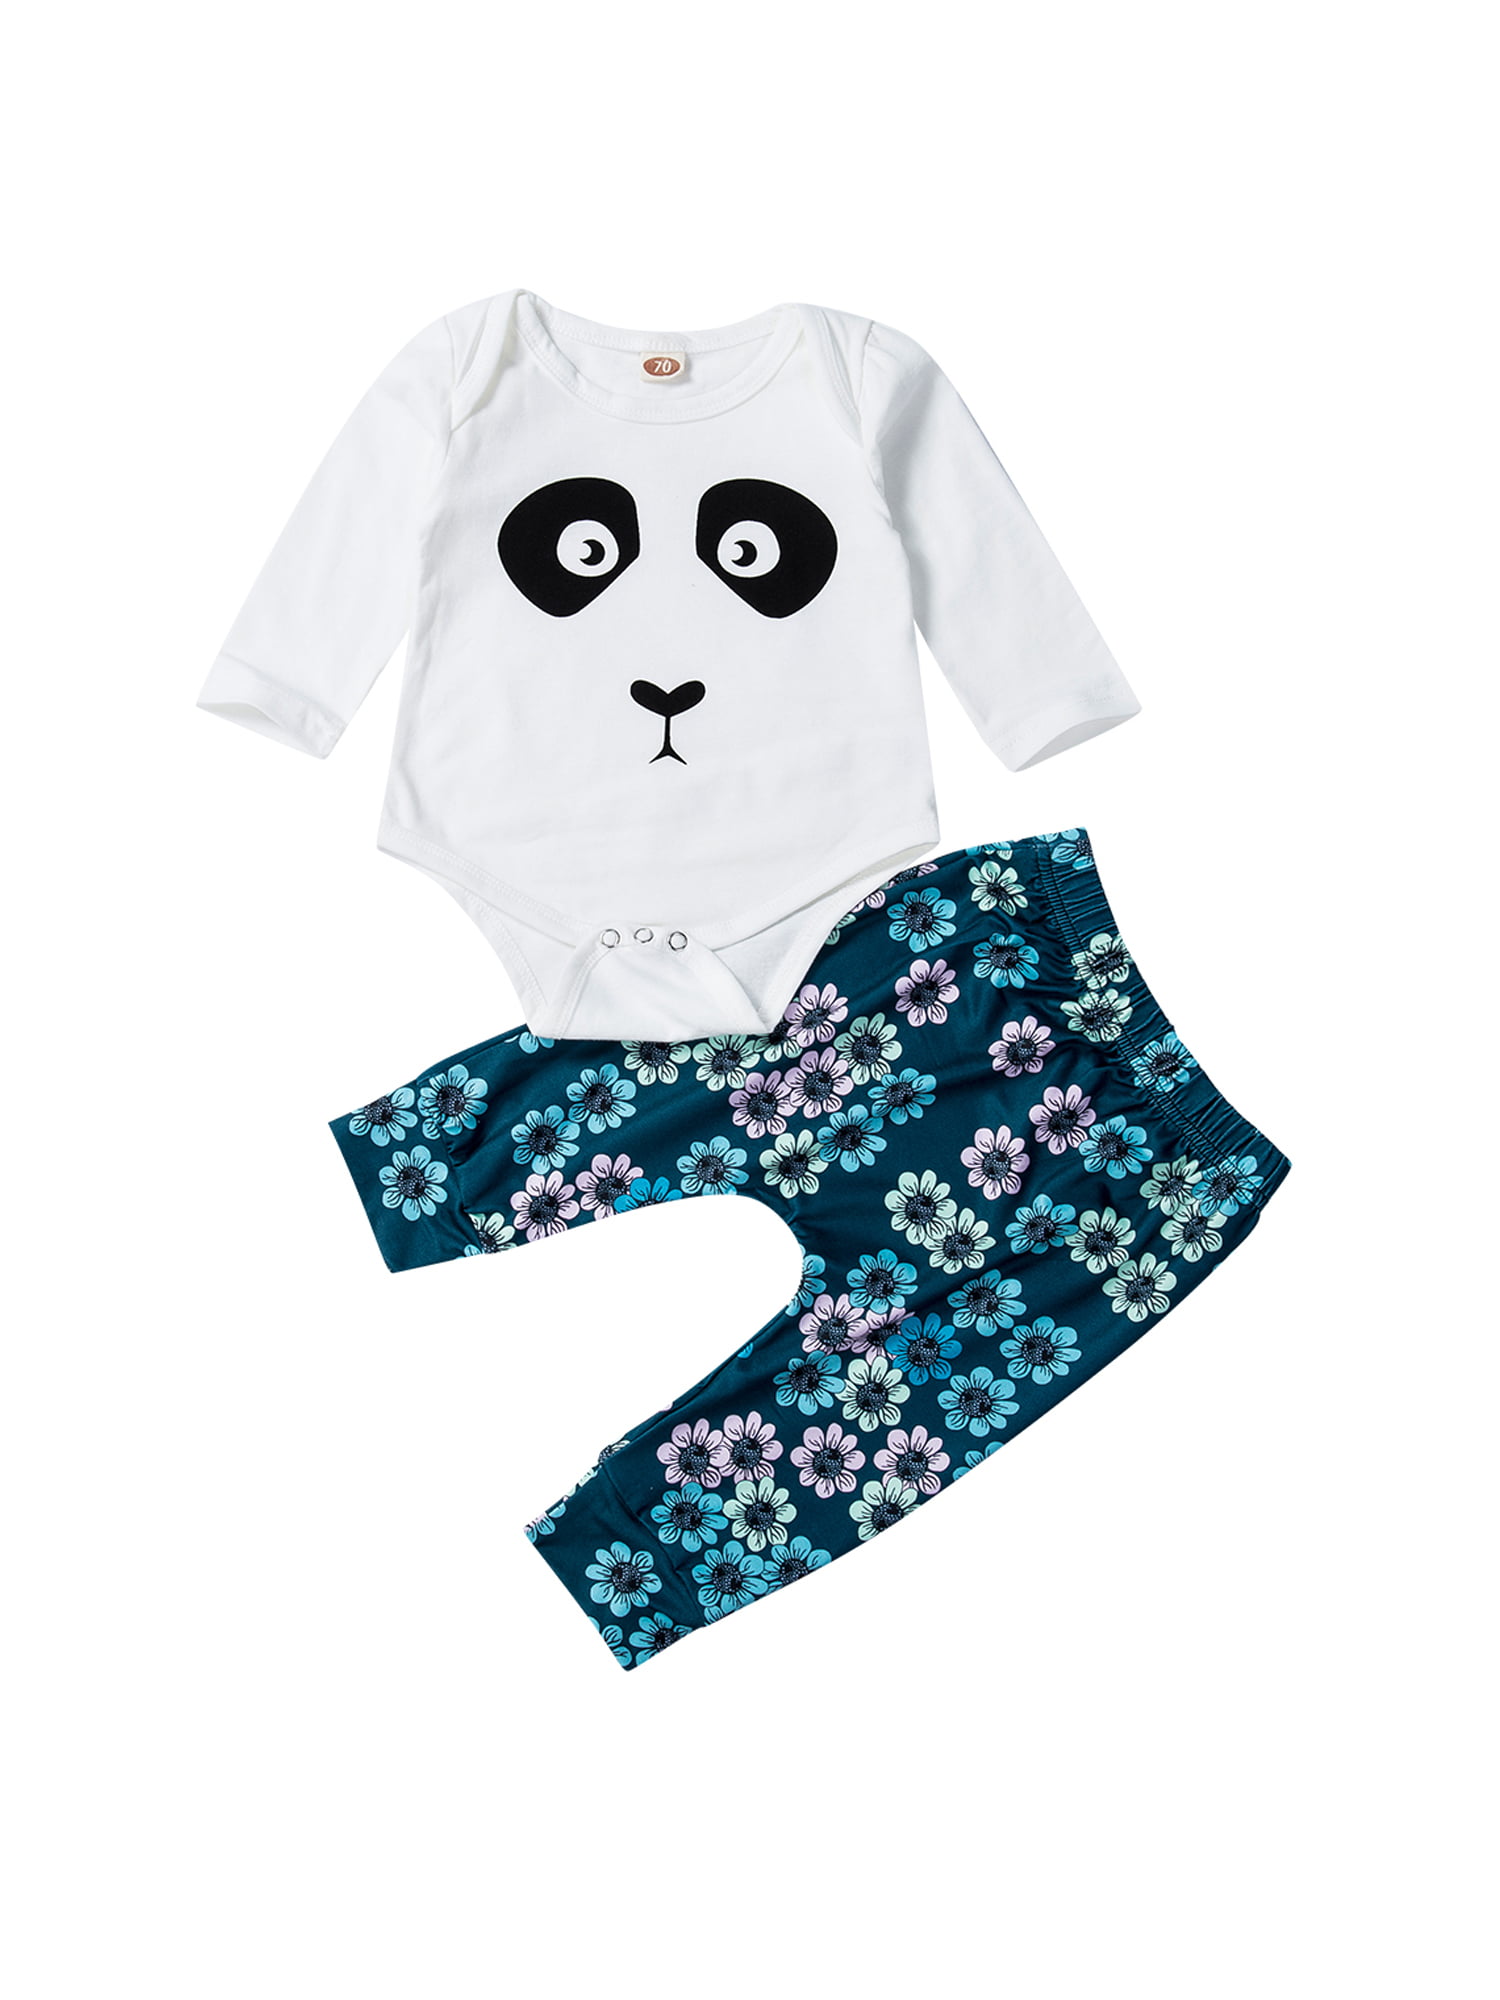 Baby kids boys clothes top vest & short pants 2PCs summer daily Outfits panda 